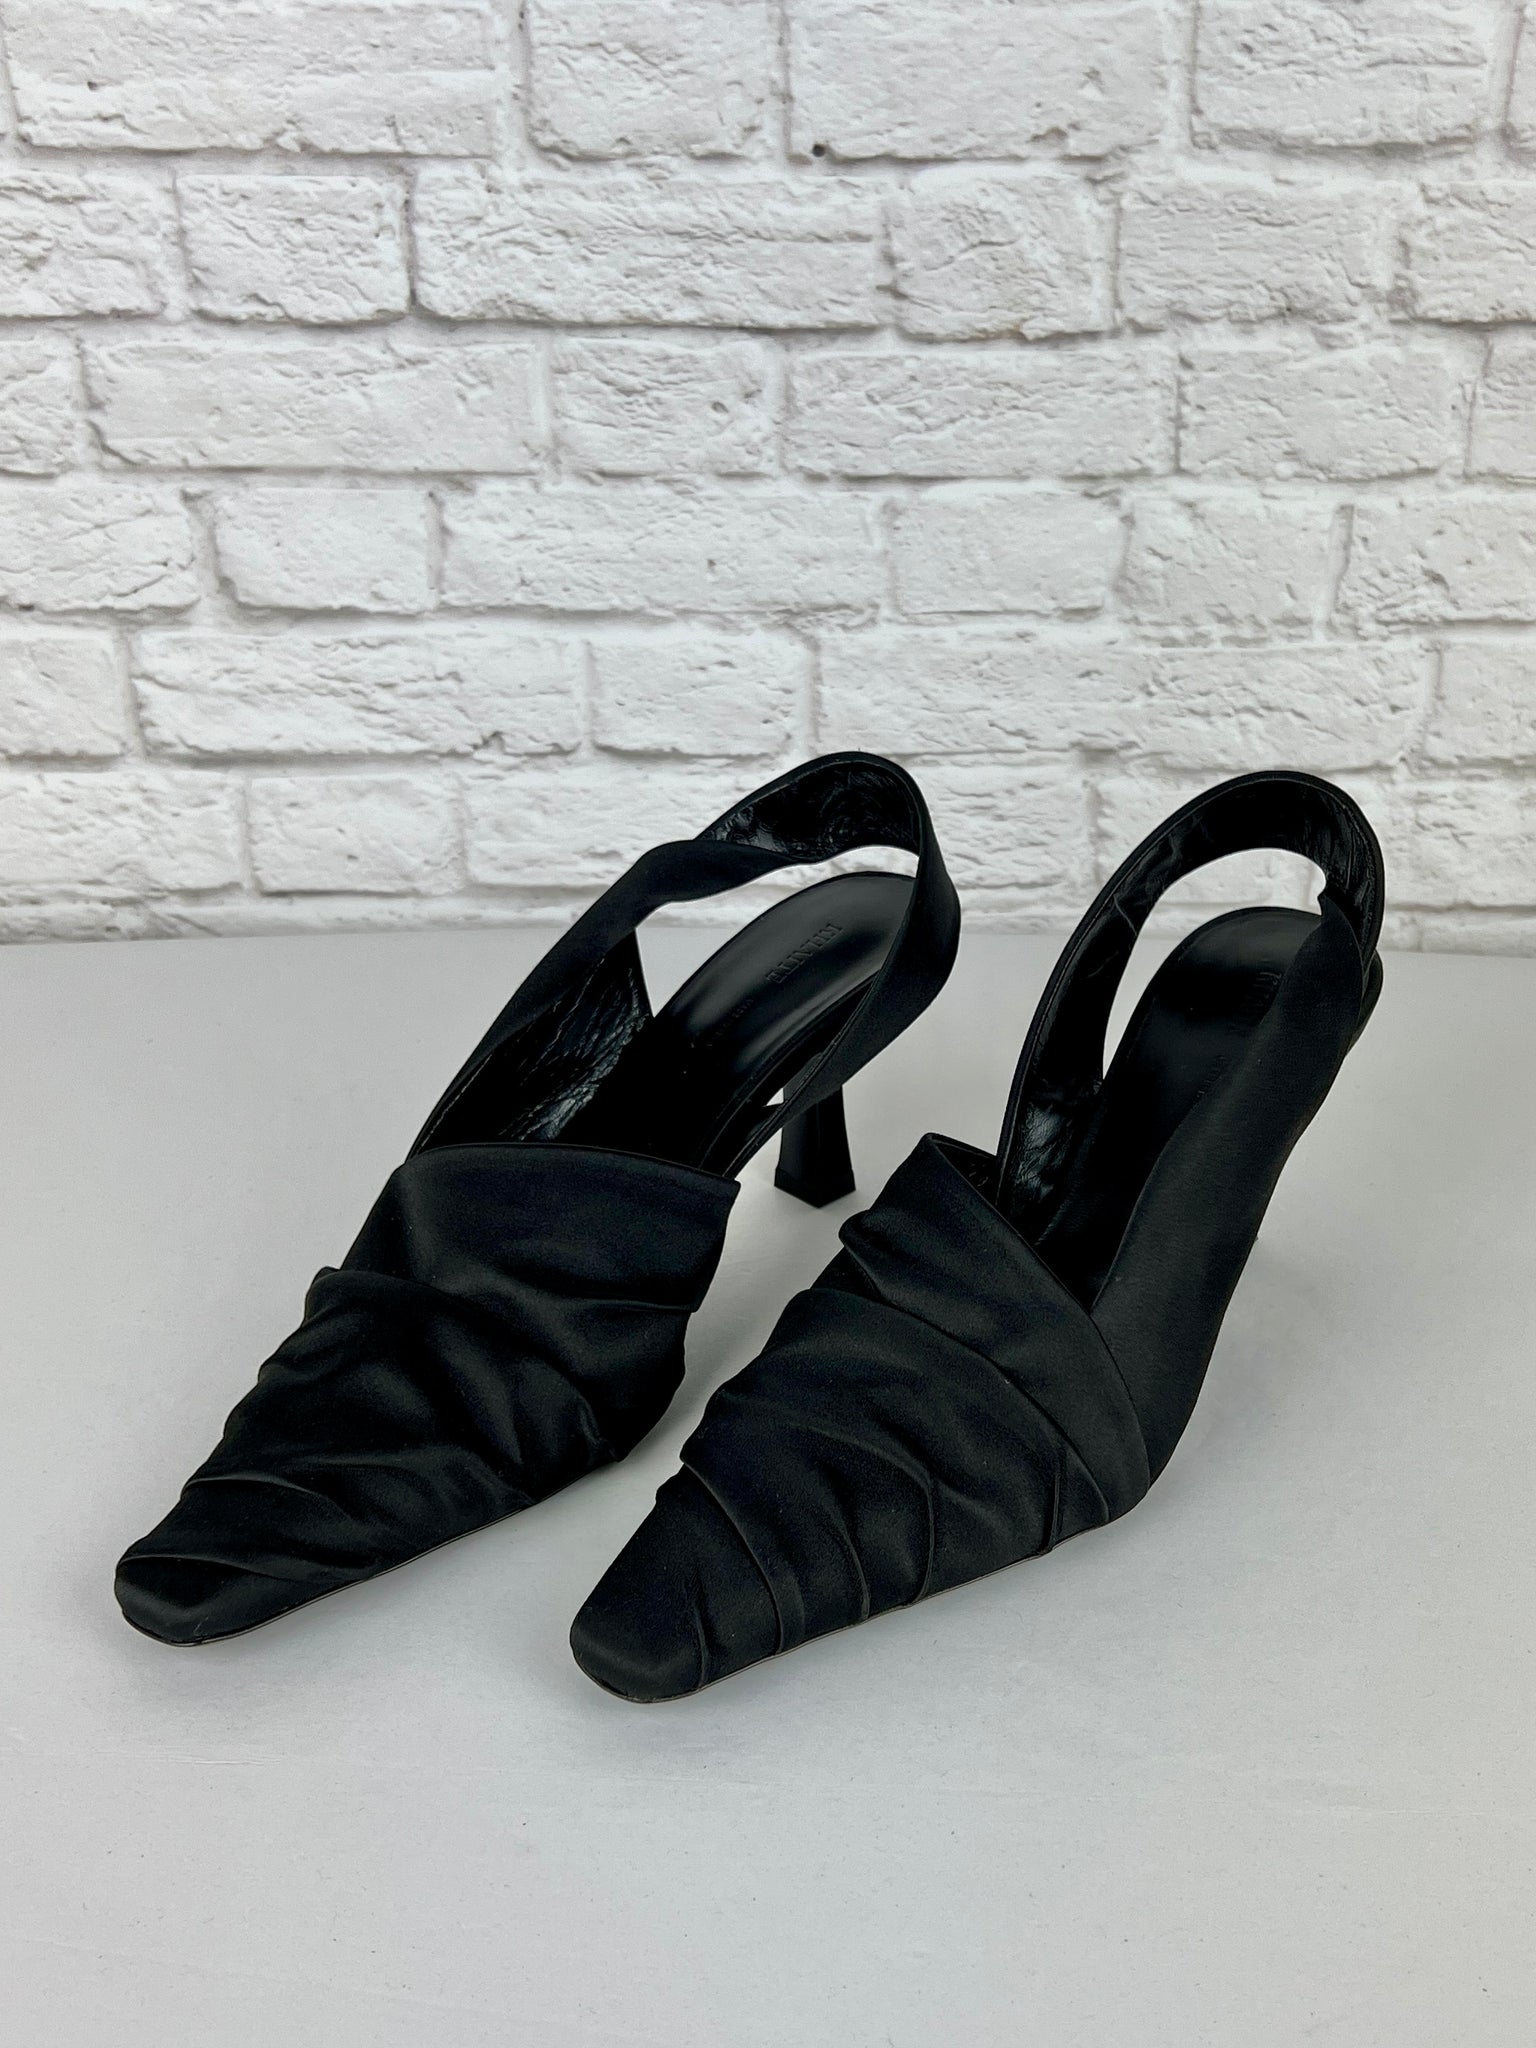 KHAITE Satin Water pointed-toe leather pumps, Size 40/US10, Black